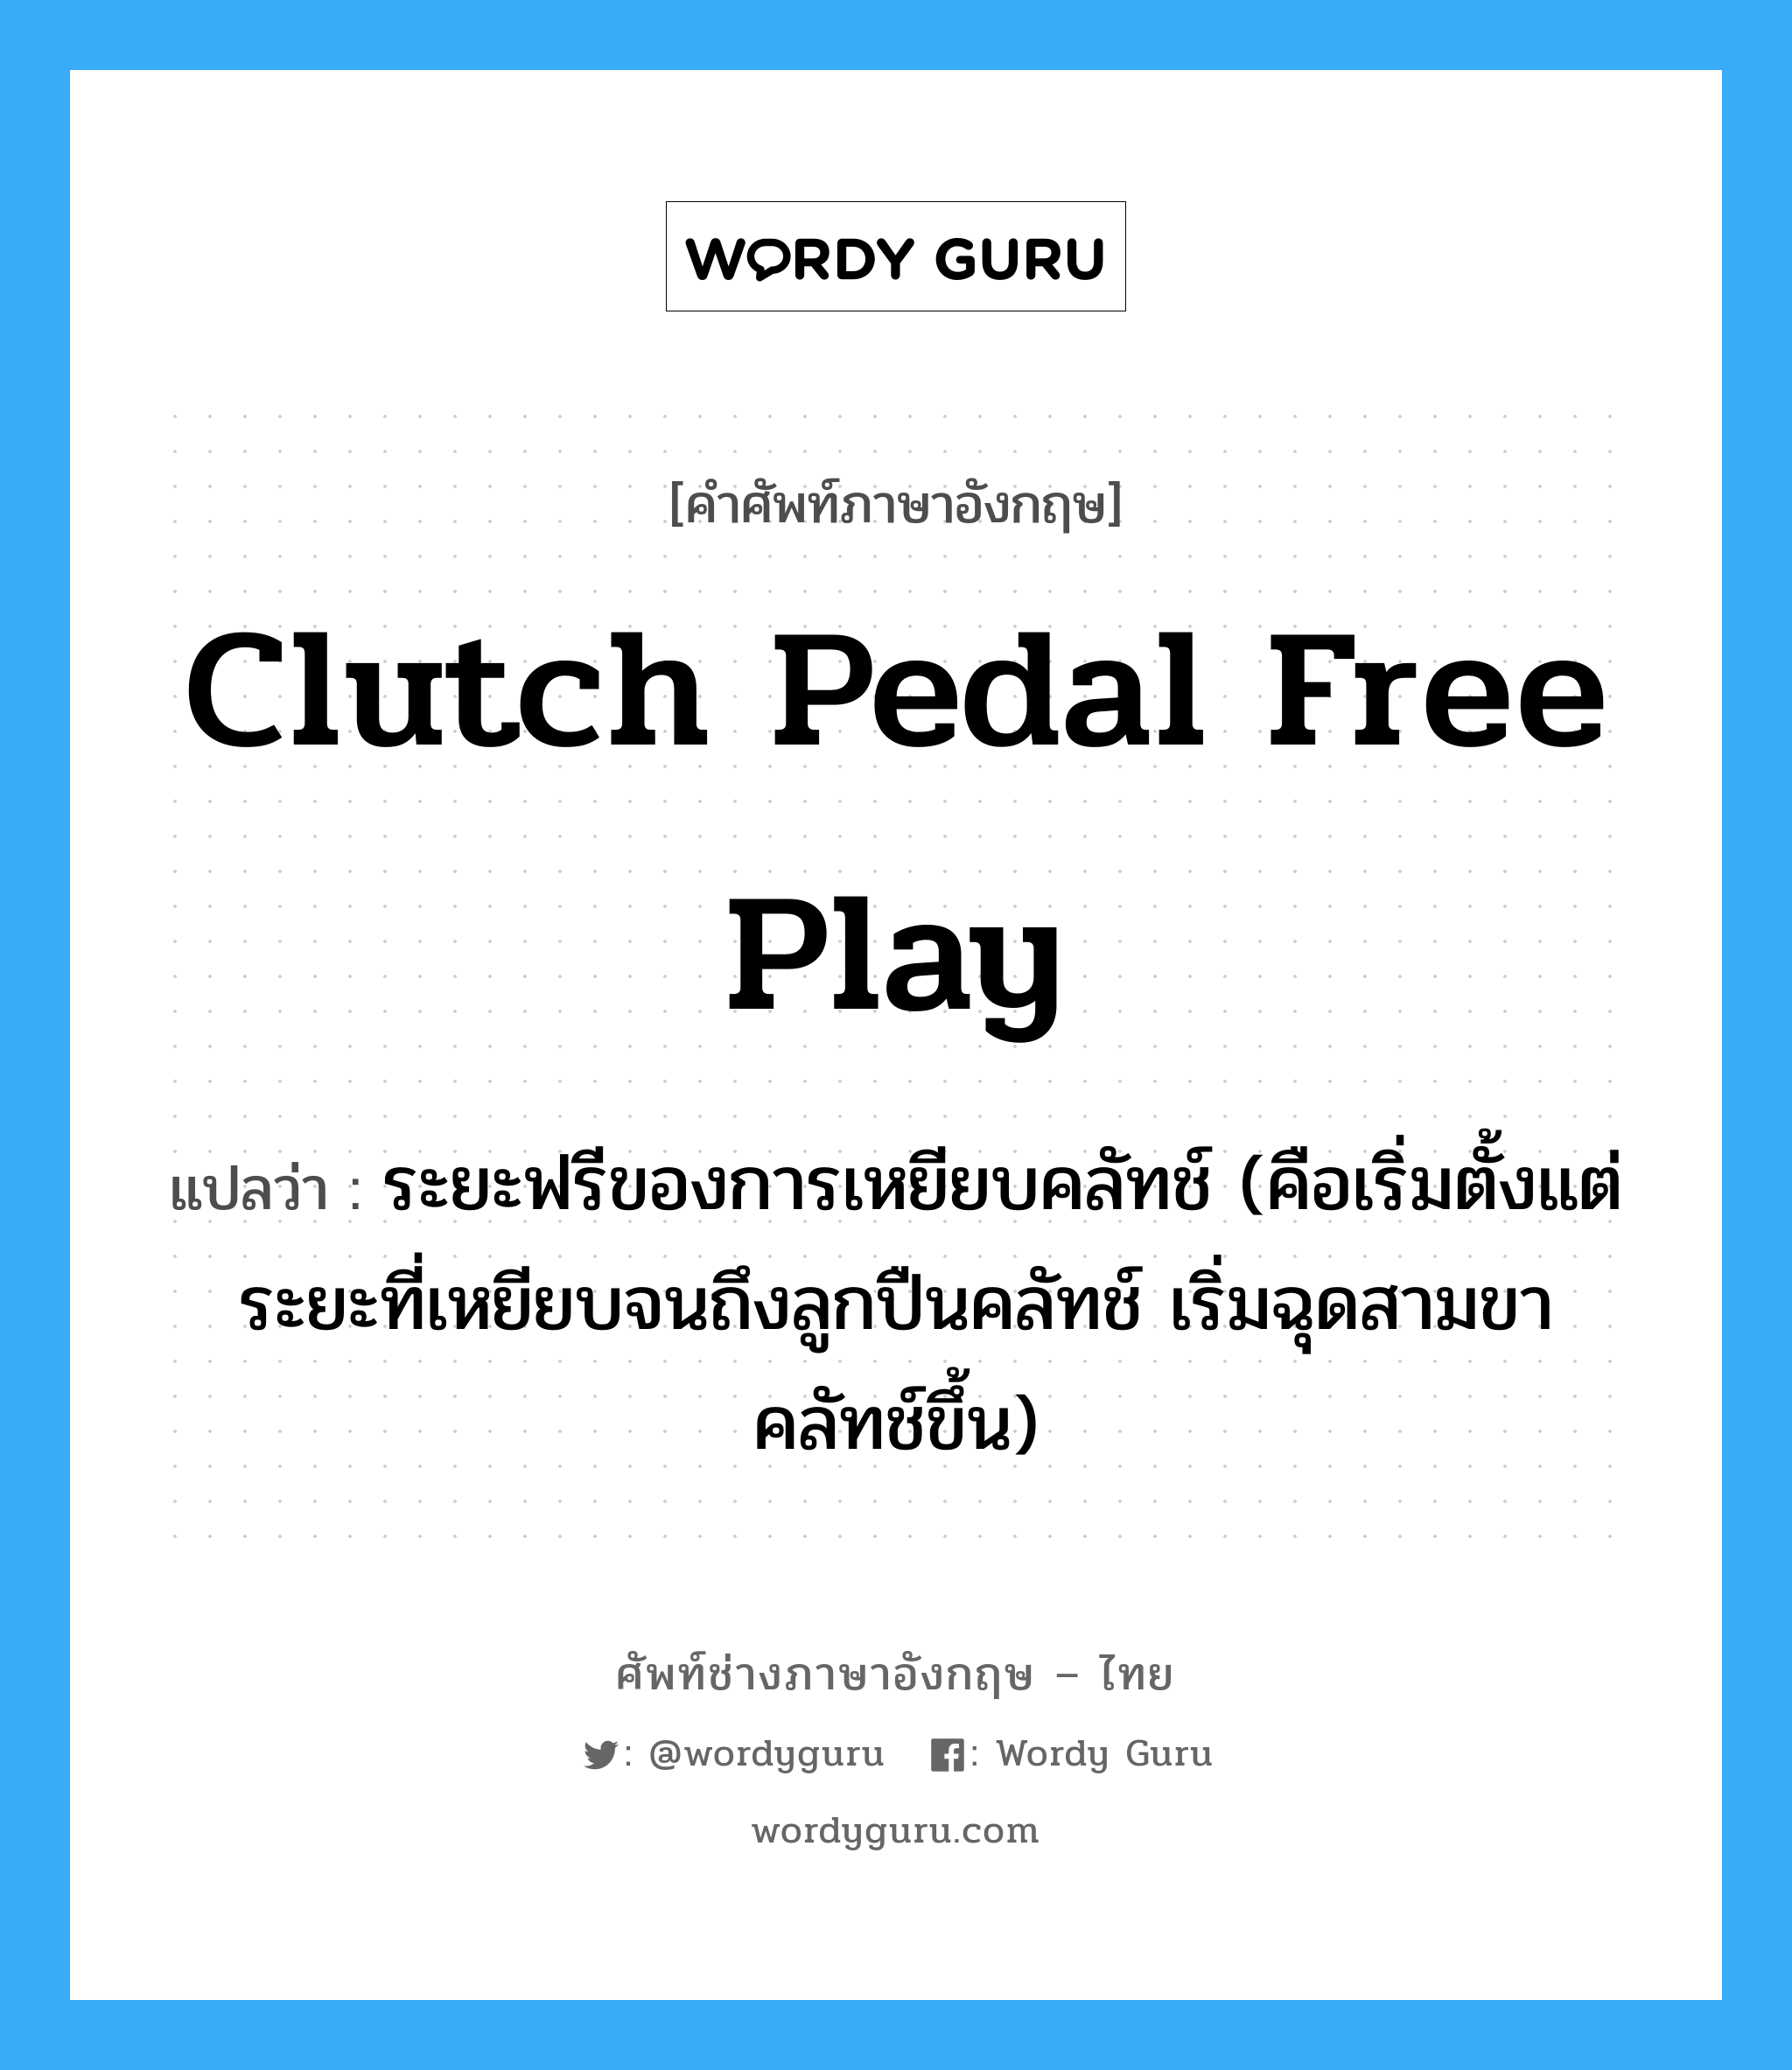 clutch pedal free play แปลว่า?, คำศัพท์ช่างภาษาอังกฤษ - ไทย clutch pedal free play คำศัพท์ภาษาอังกฤษ clutch pedal free play แปลว่า ระยะฟรีของการเหยียบคลัทช์ (คือเริ่มตั้งแต่ระยะที่เหยียบจนถึงลูกปืนคลัทช์ เริ่มฉุดสามขาคลัทช์ขึ้น)